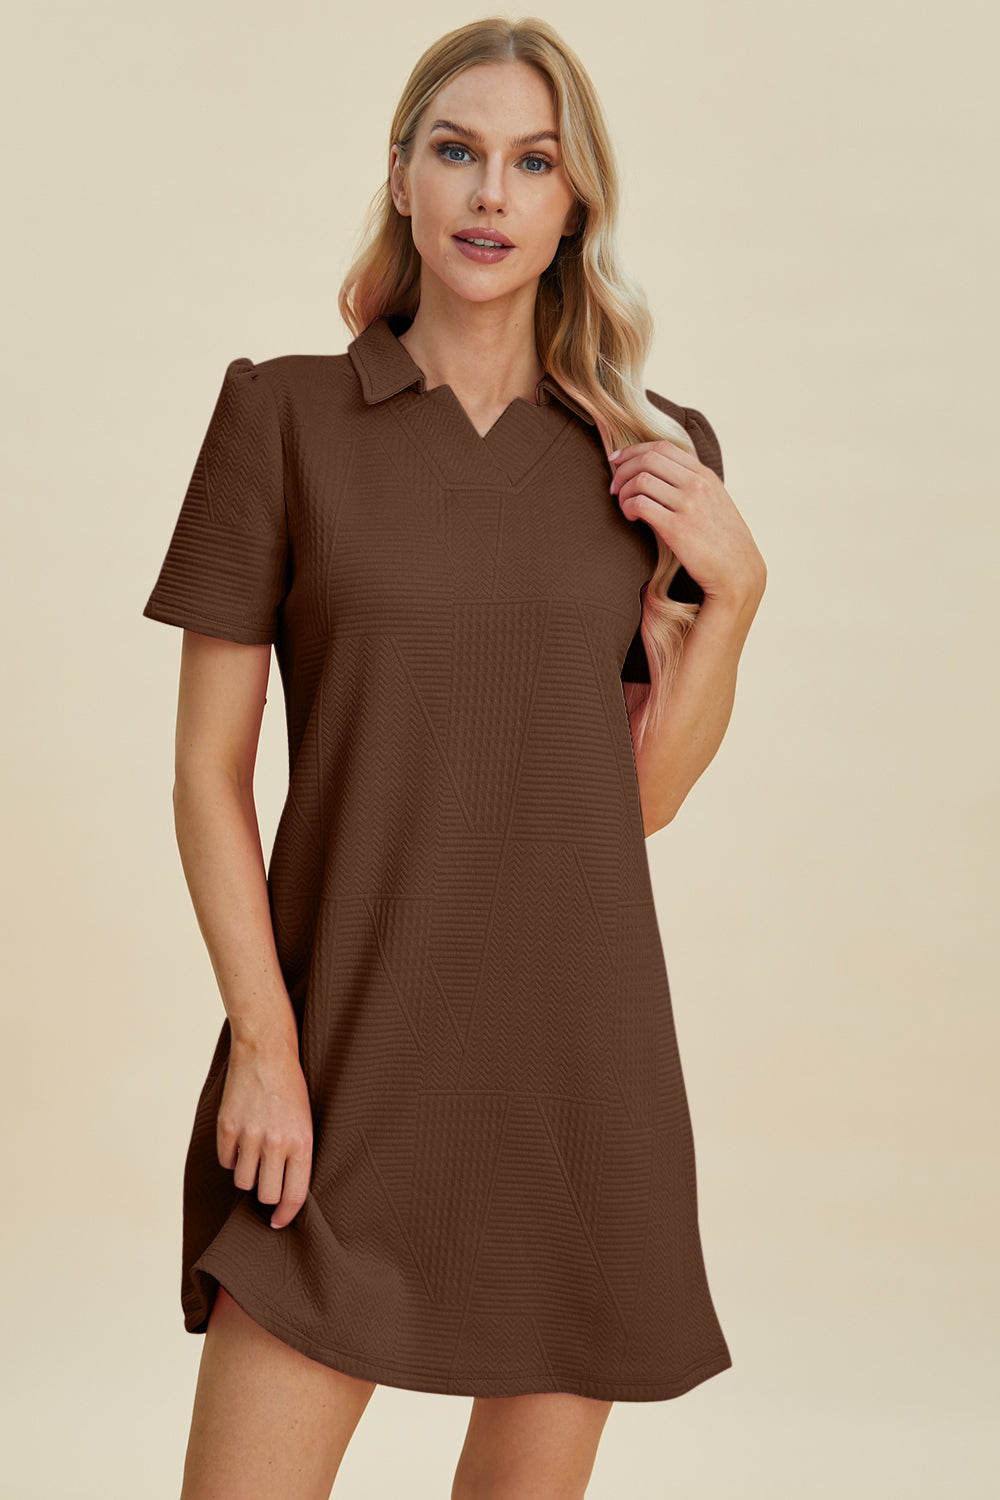 Double Take Full Size Texture Short Sleeve Dress